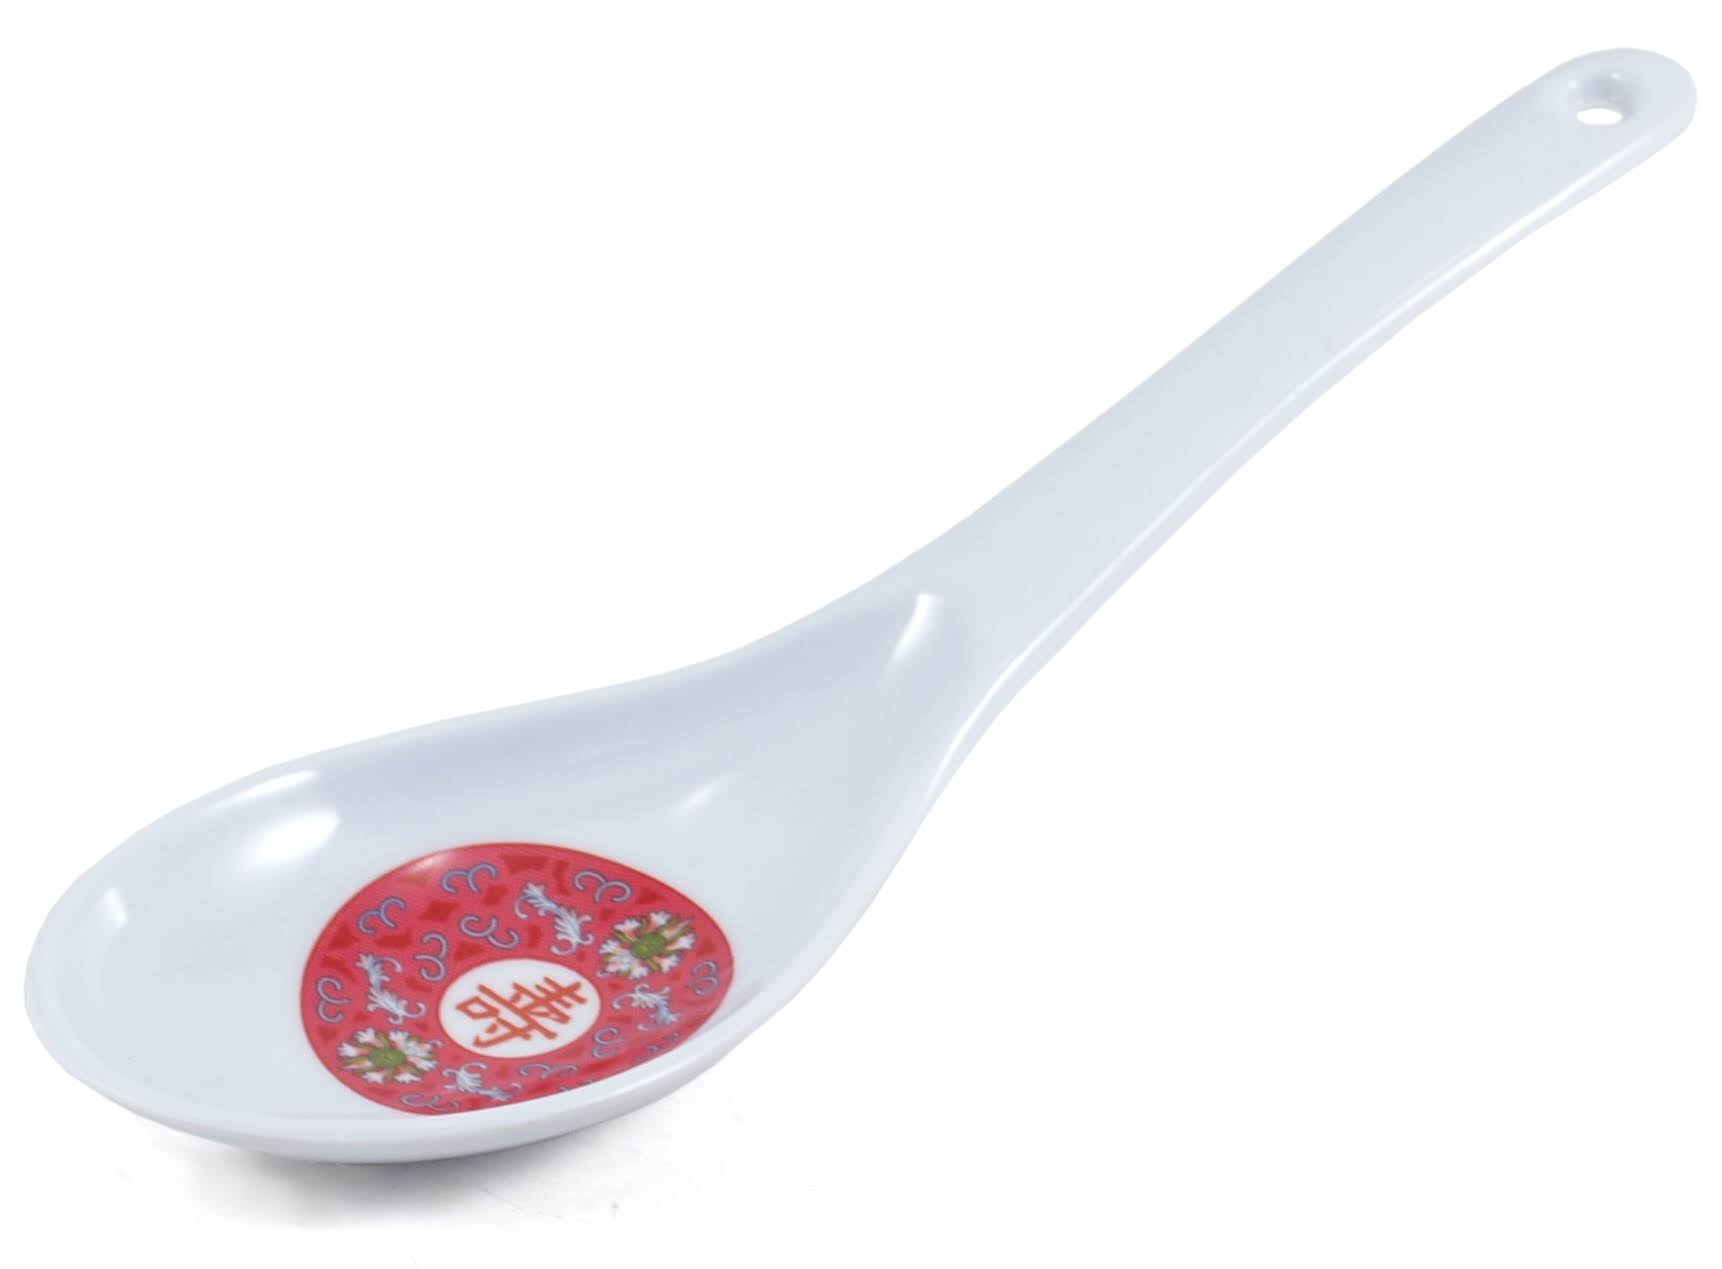 BigKitchen Longevity Melamine Asian Rice Paddle Serving Spoon Red